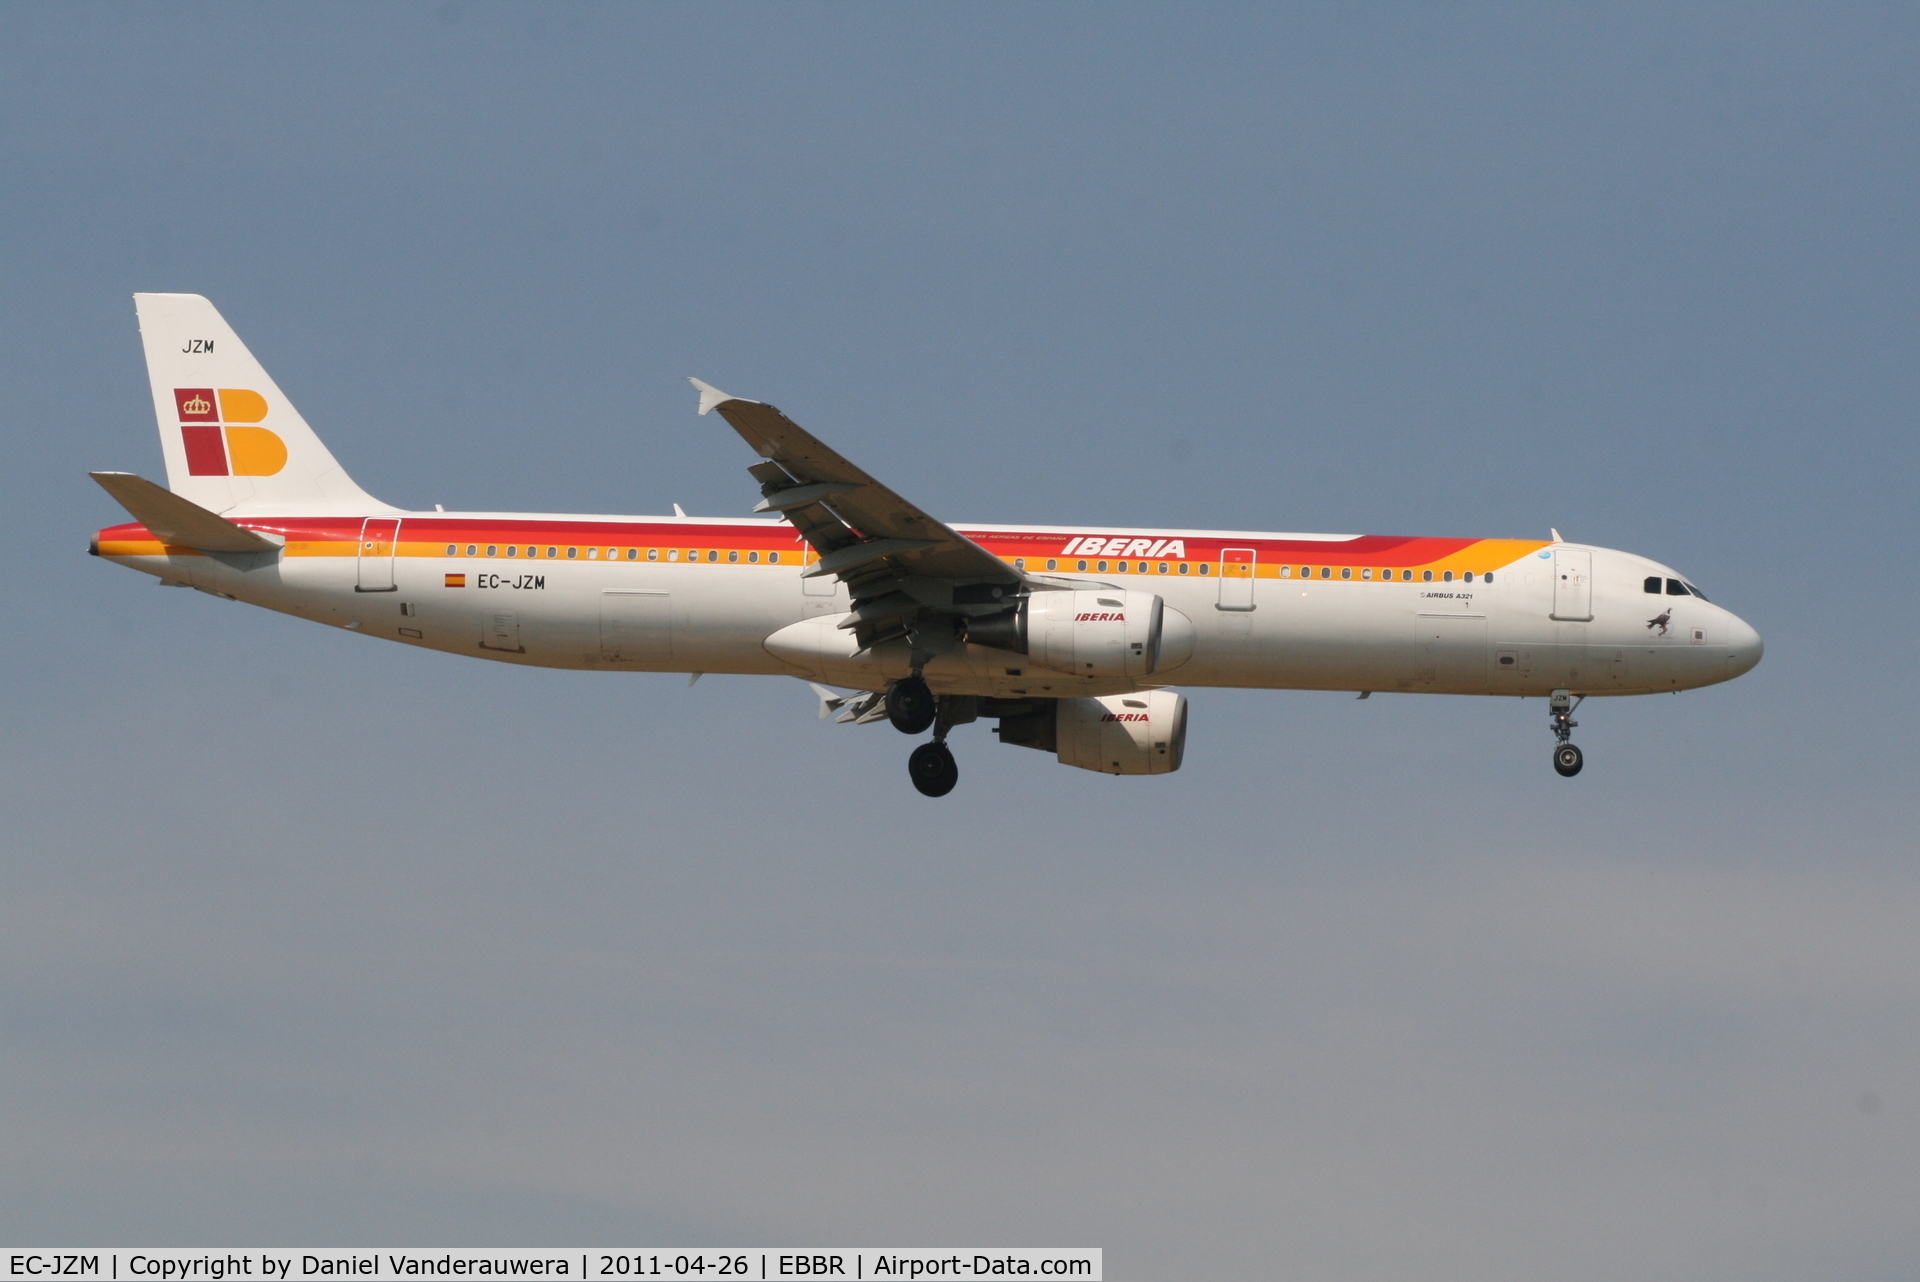 EC-JZM, 2007 Airbus A321-212 C/N 2996, Flight IB3206 is descending to RWY 02